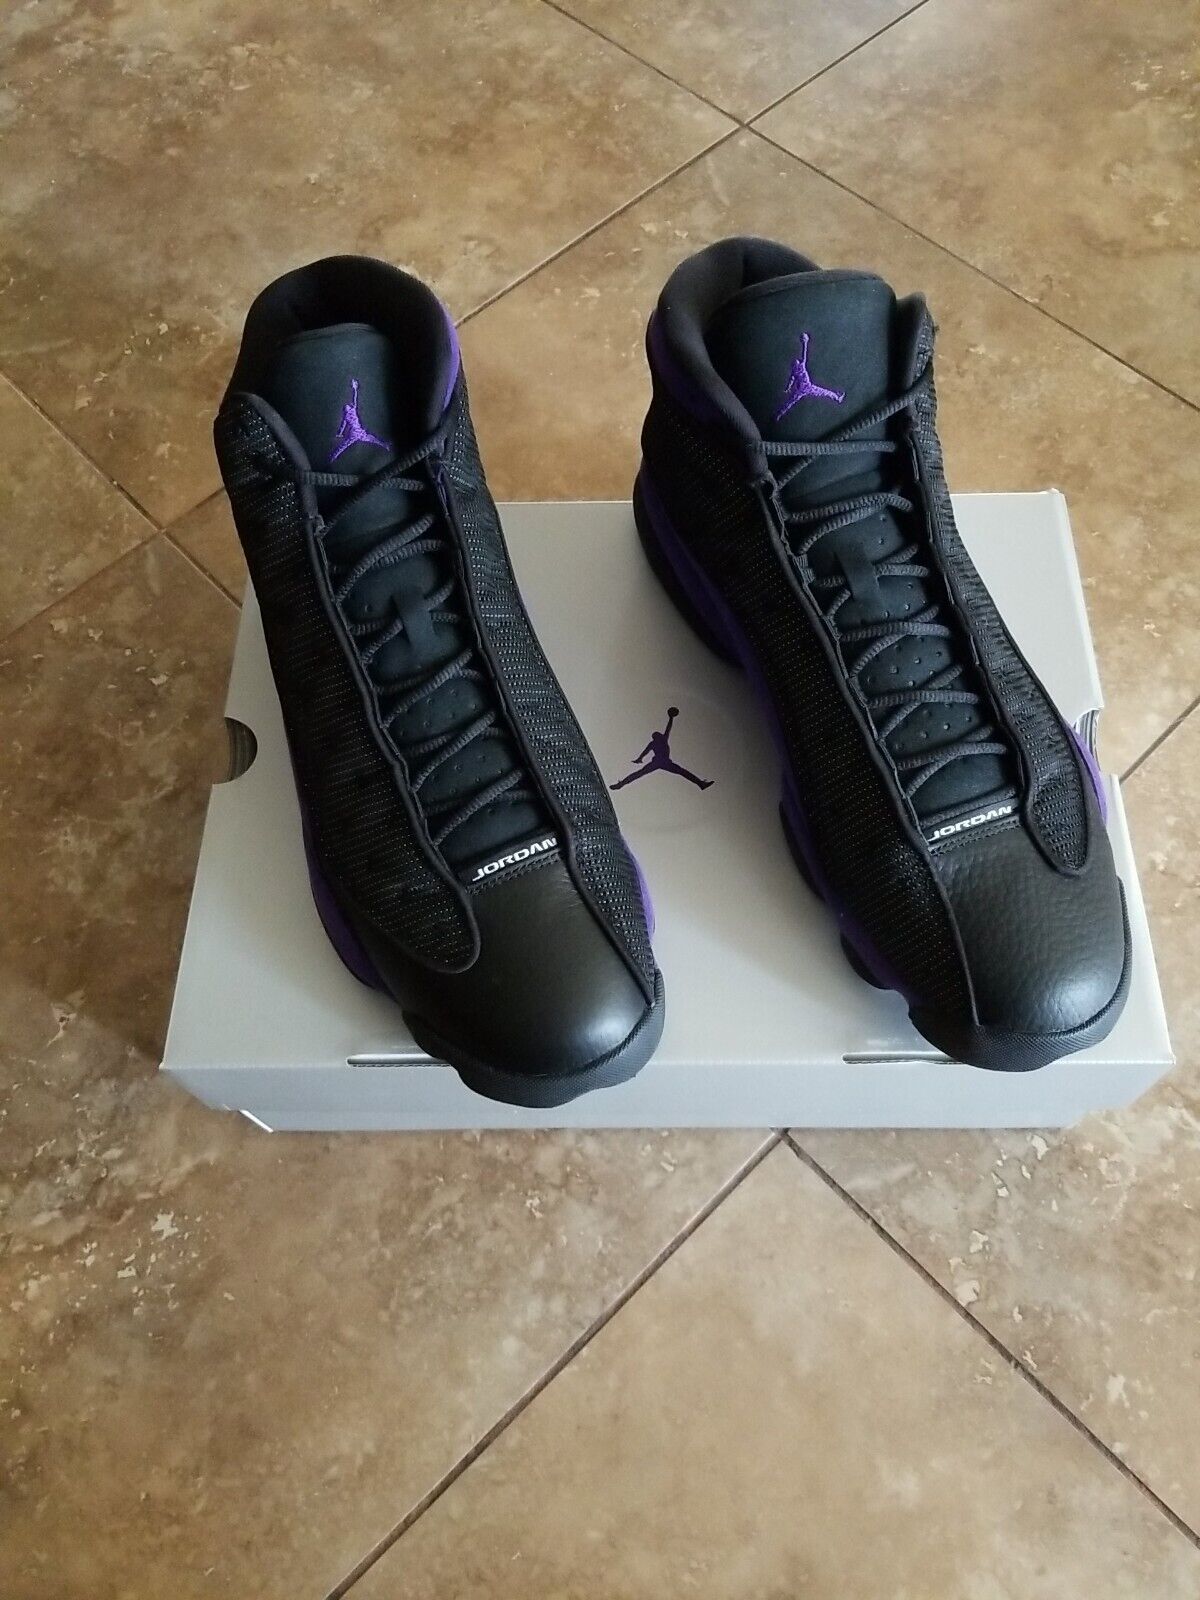 jordan 13 court purple on feet